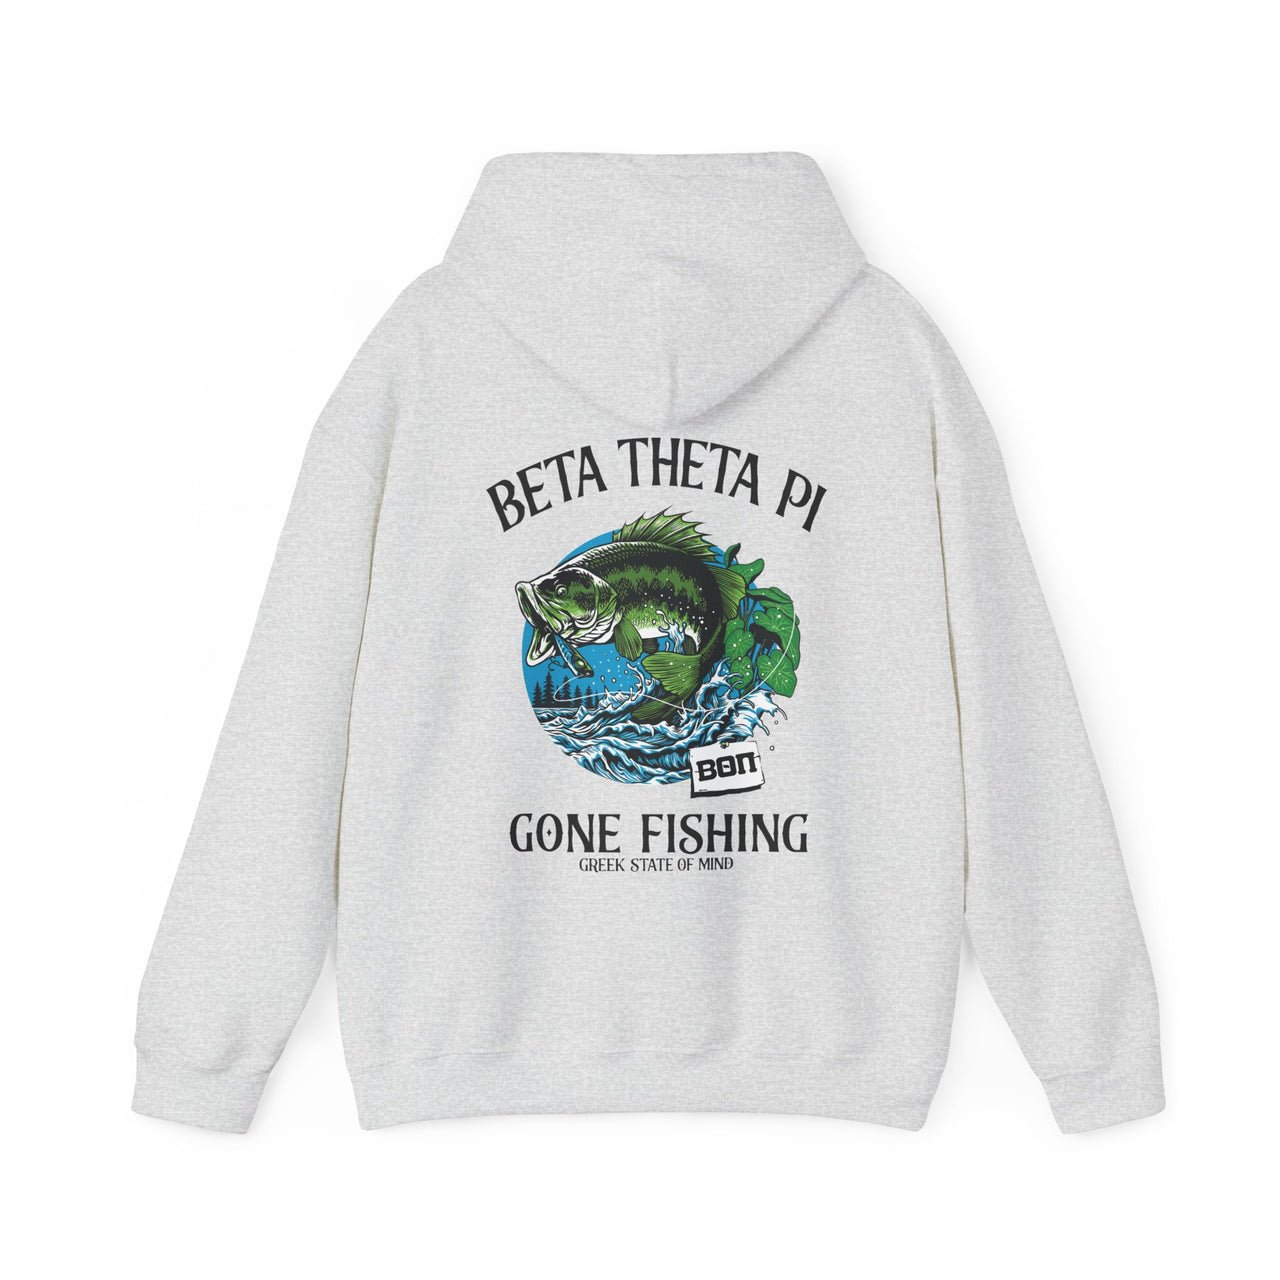 Beta Theta Pi Graphic Hoodie | Gone Fishing